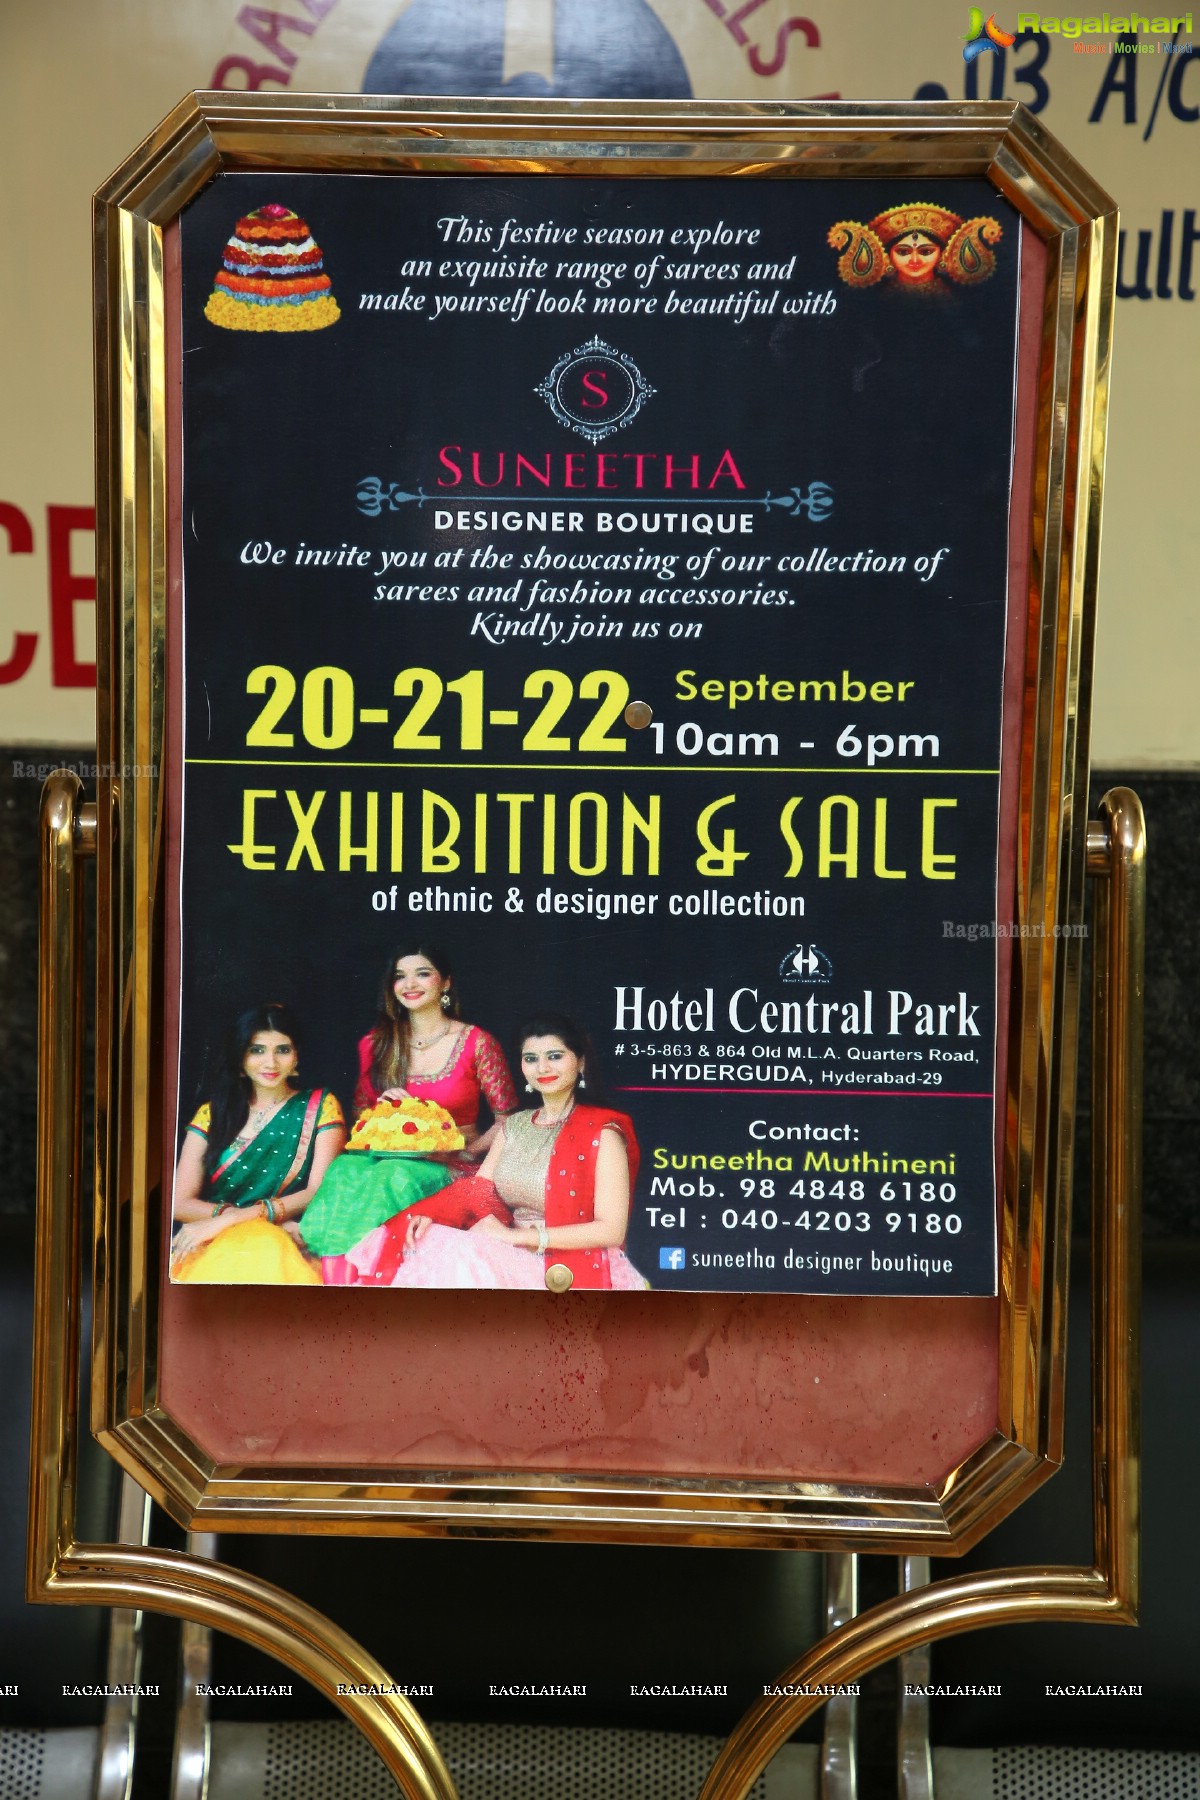 Suneetha Designer Boutique Exhibiion & Sale at Hotel Central Park